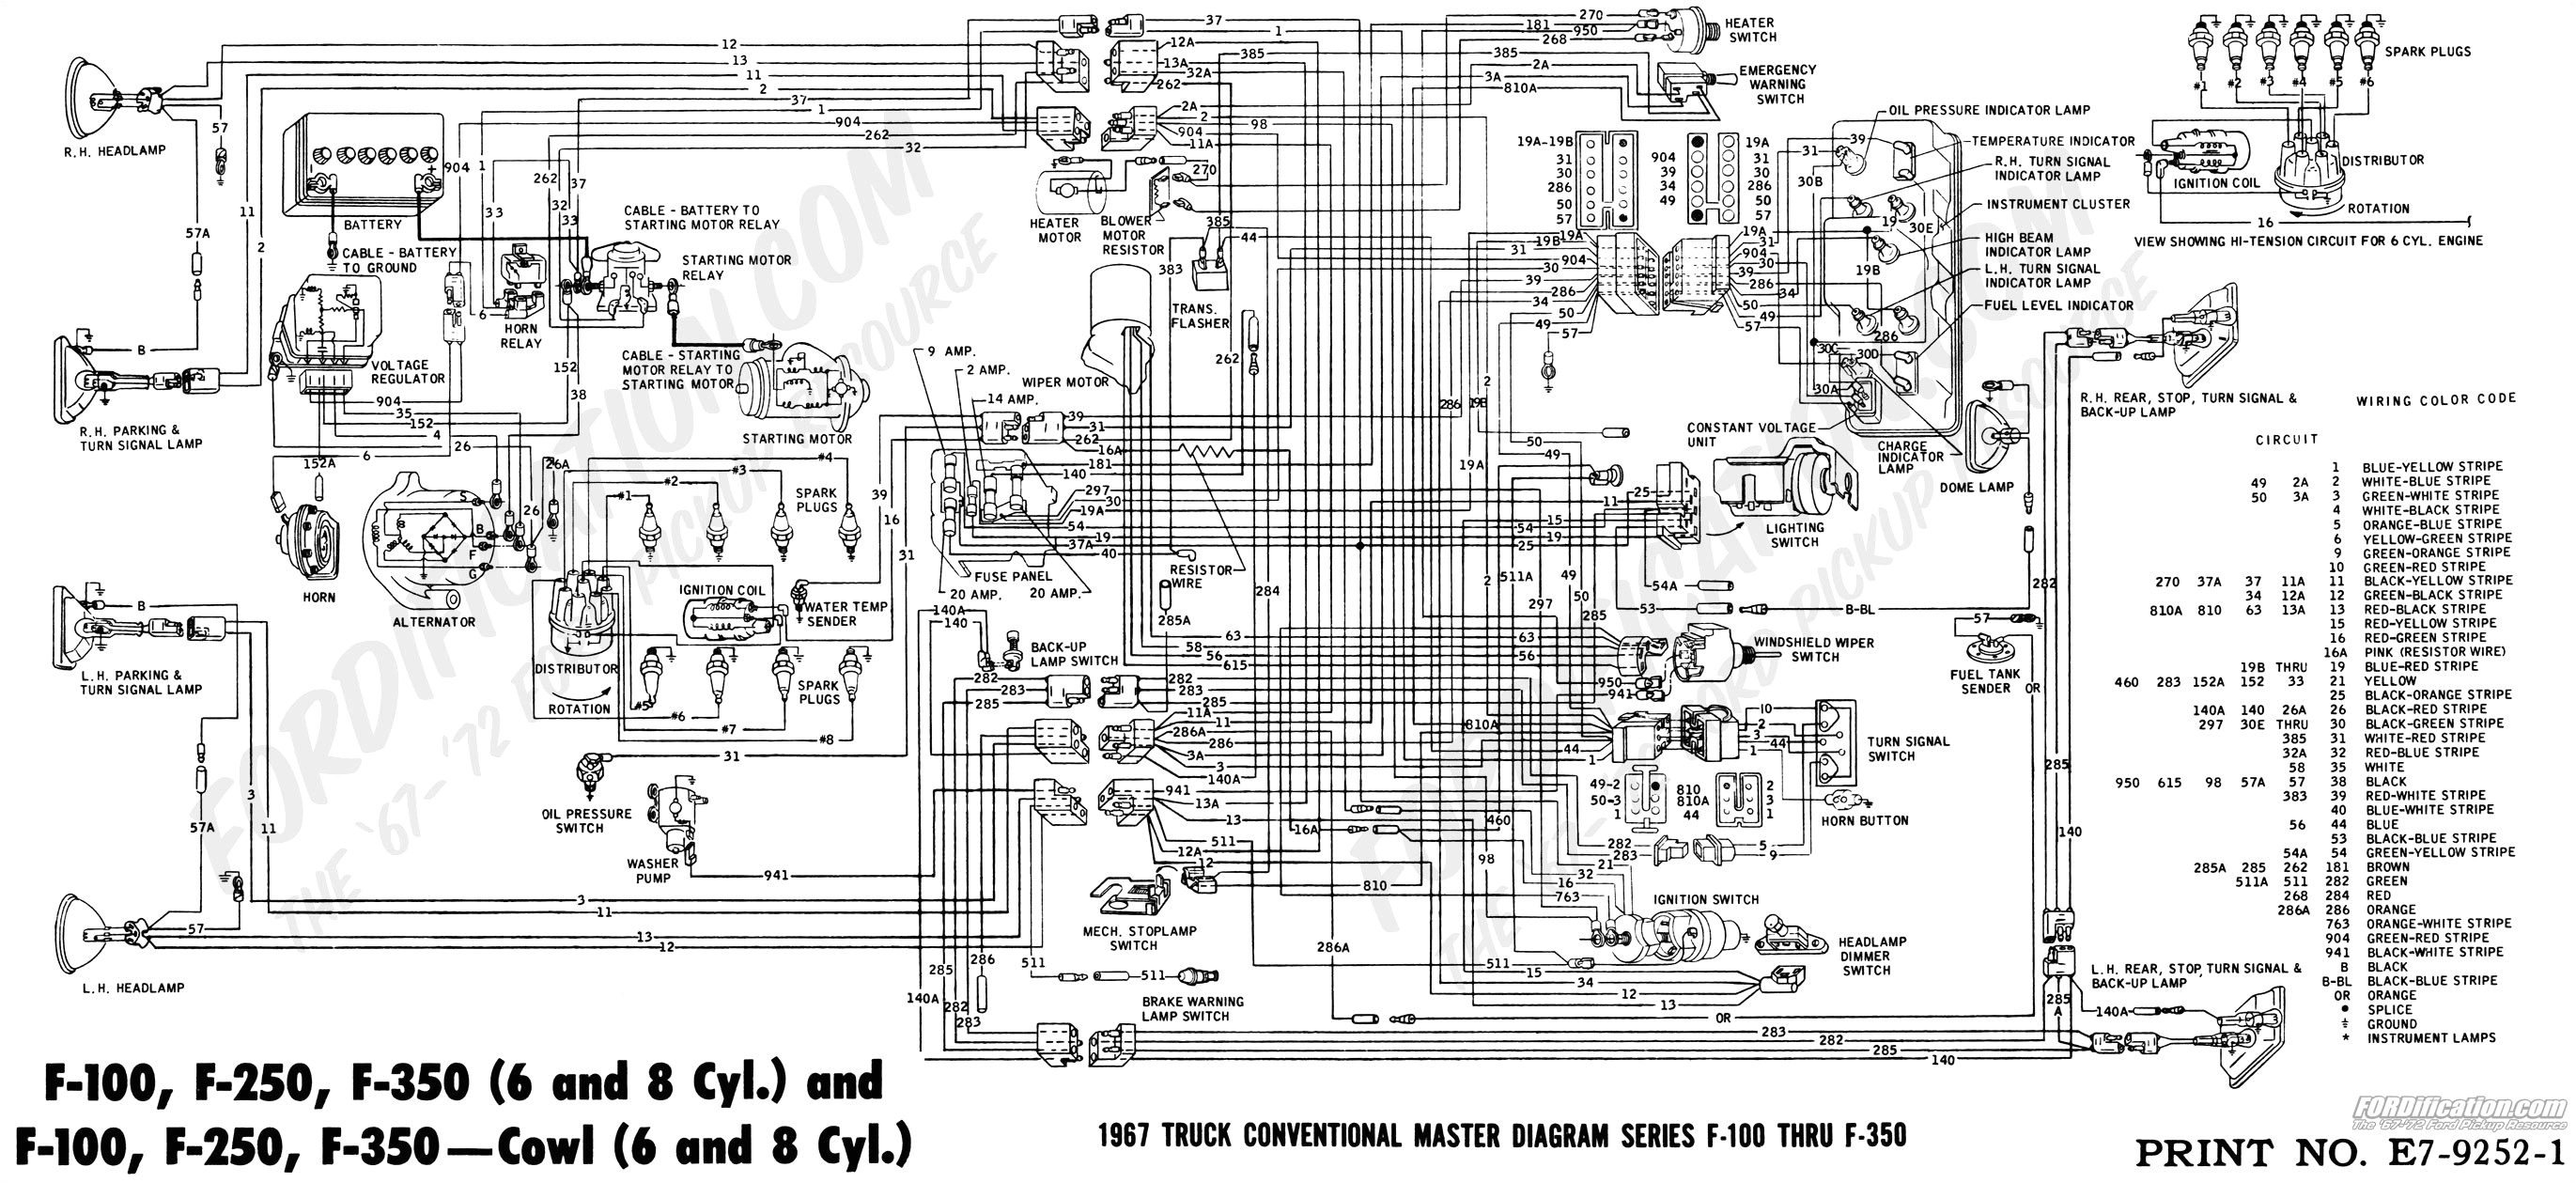 1987 ford f600 wiring diagram wiring diagram load 1987 ford f600 wiring diagram